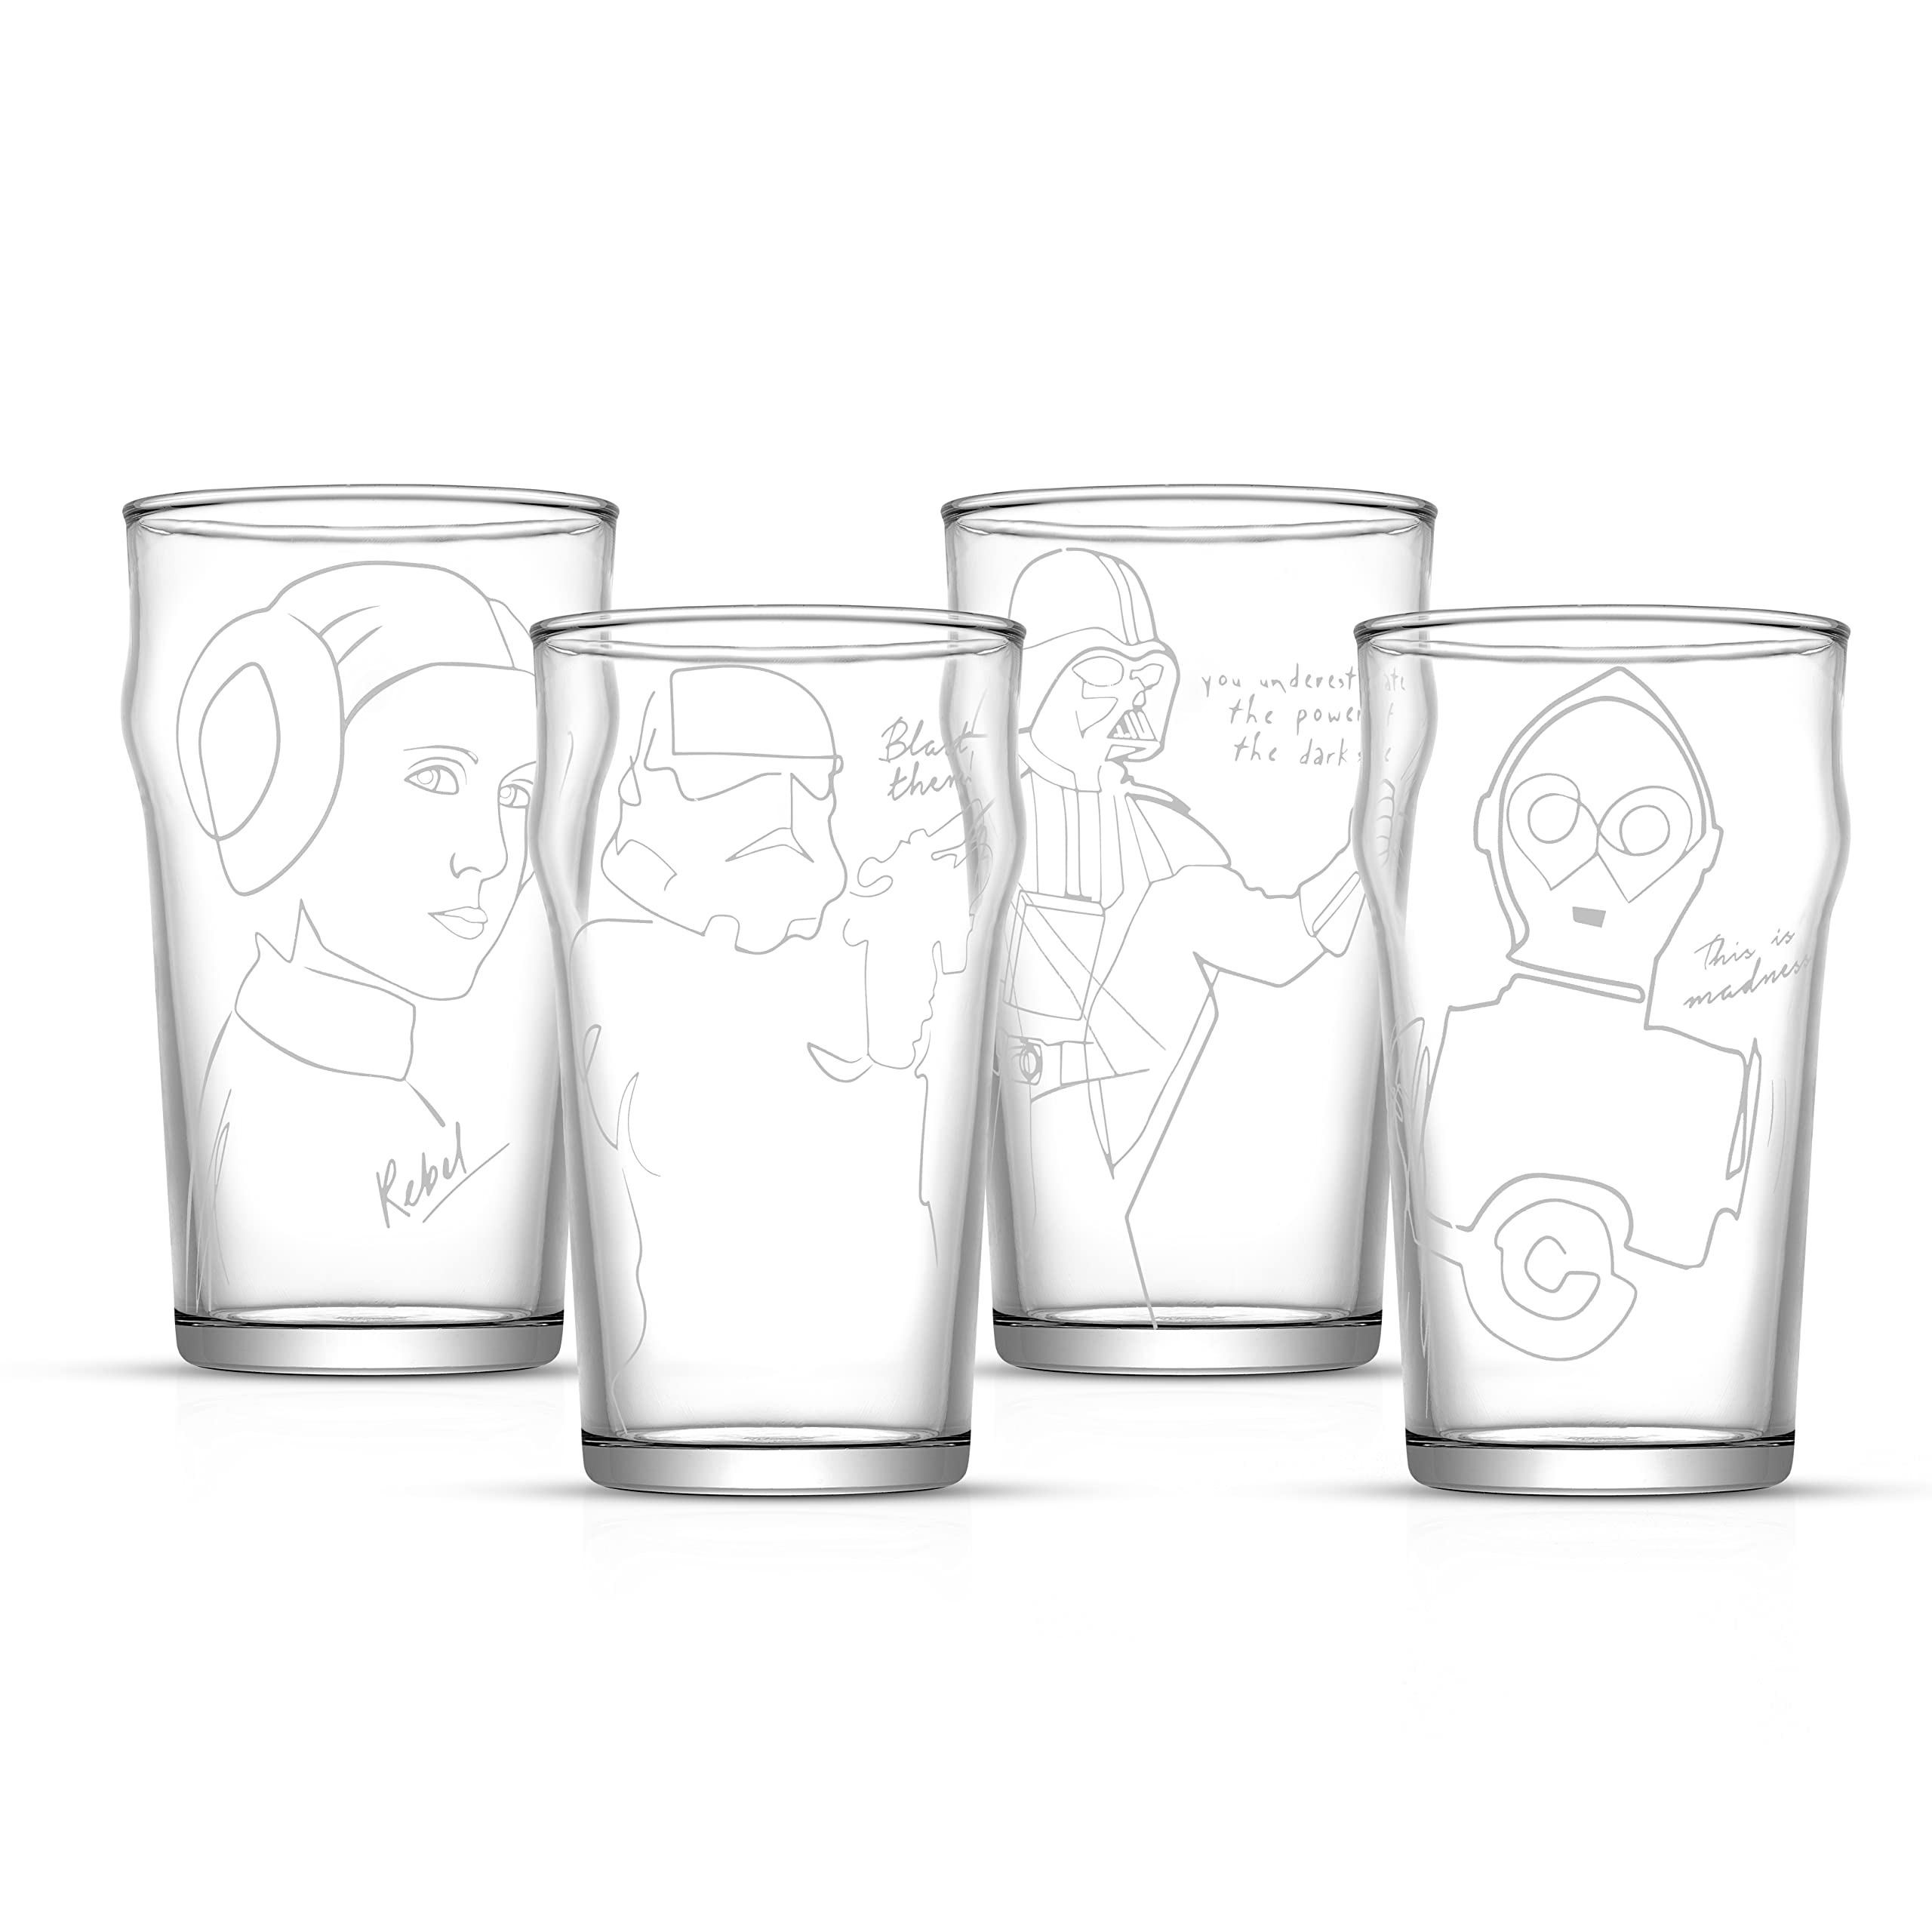 JoyJolt Sketch Art Star WarsA glassware Set of 4 Pint glasses 19oz Drinking glasses - Out of This galaxy Star Wars gifts Darth V